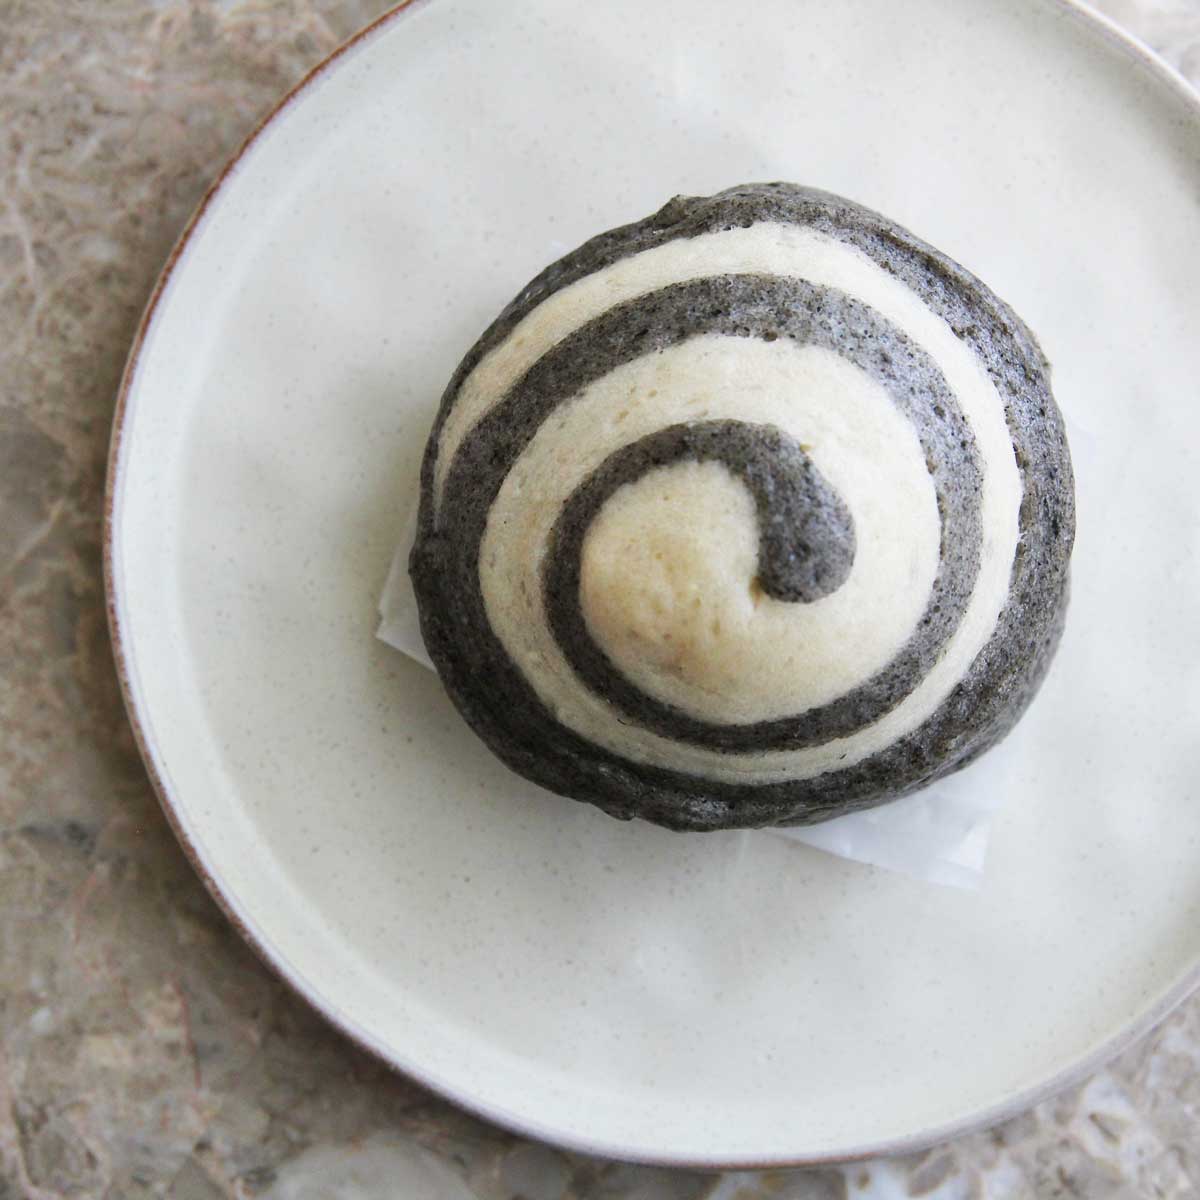 Homemade Black Sesame & Almond Milk Spiral Mantou (Vegan Steamed Buns Recipe) - Vegan Filling